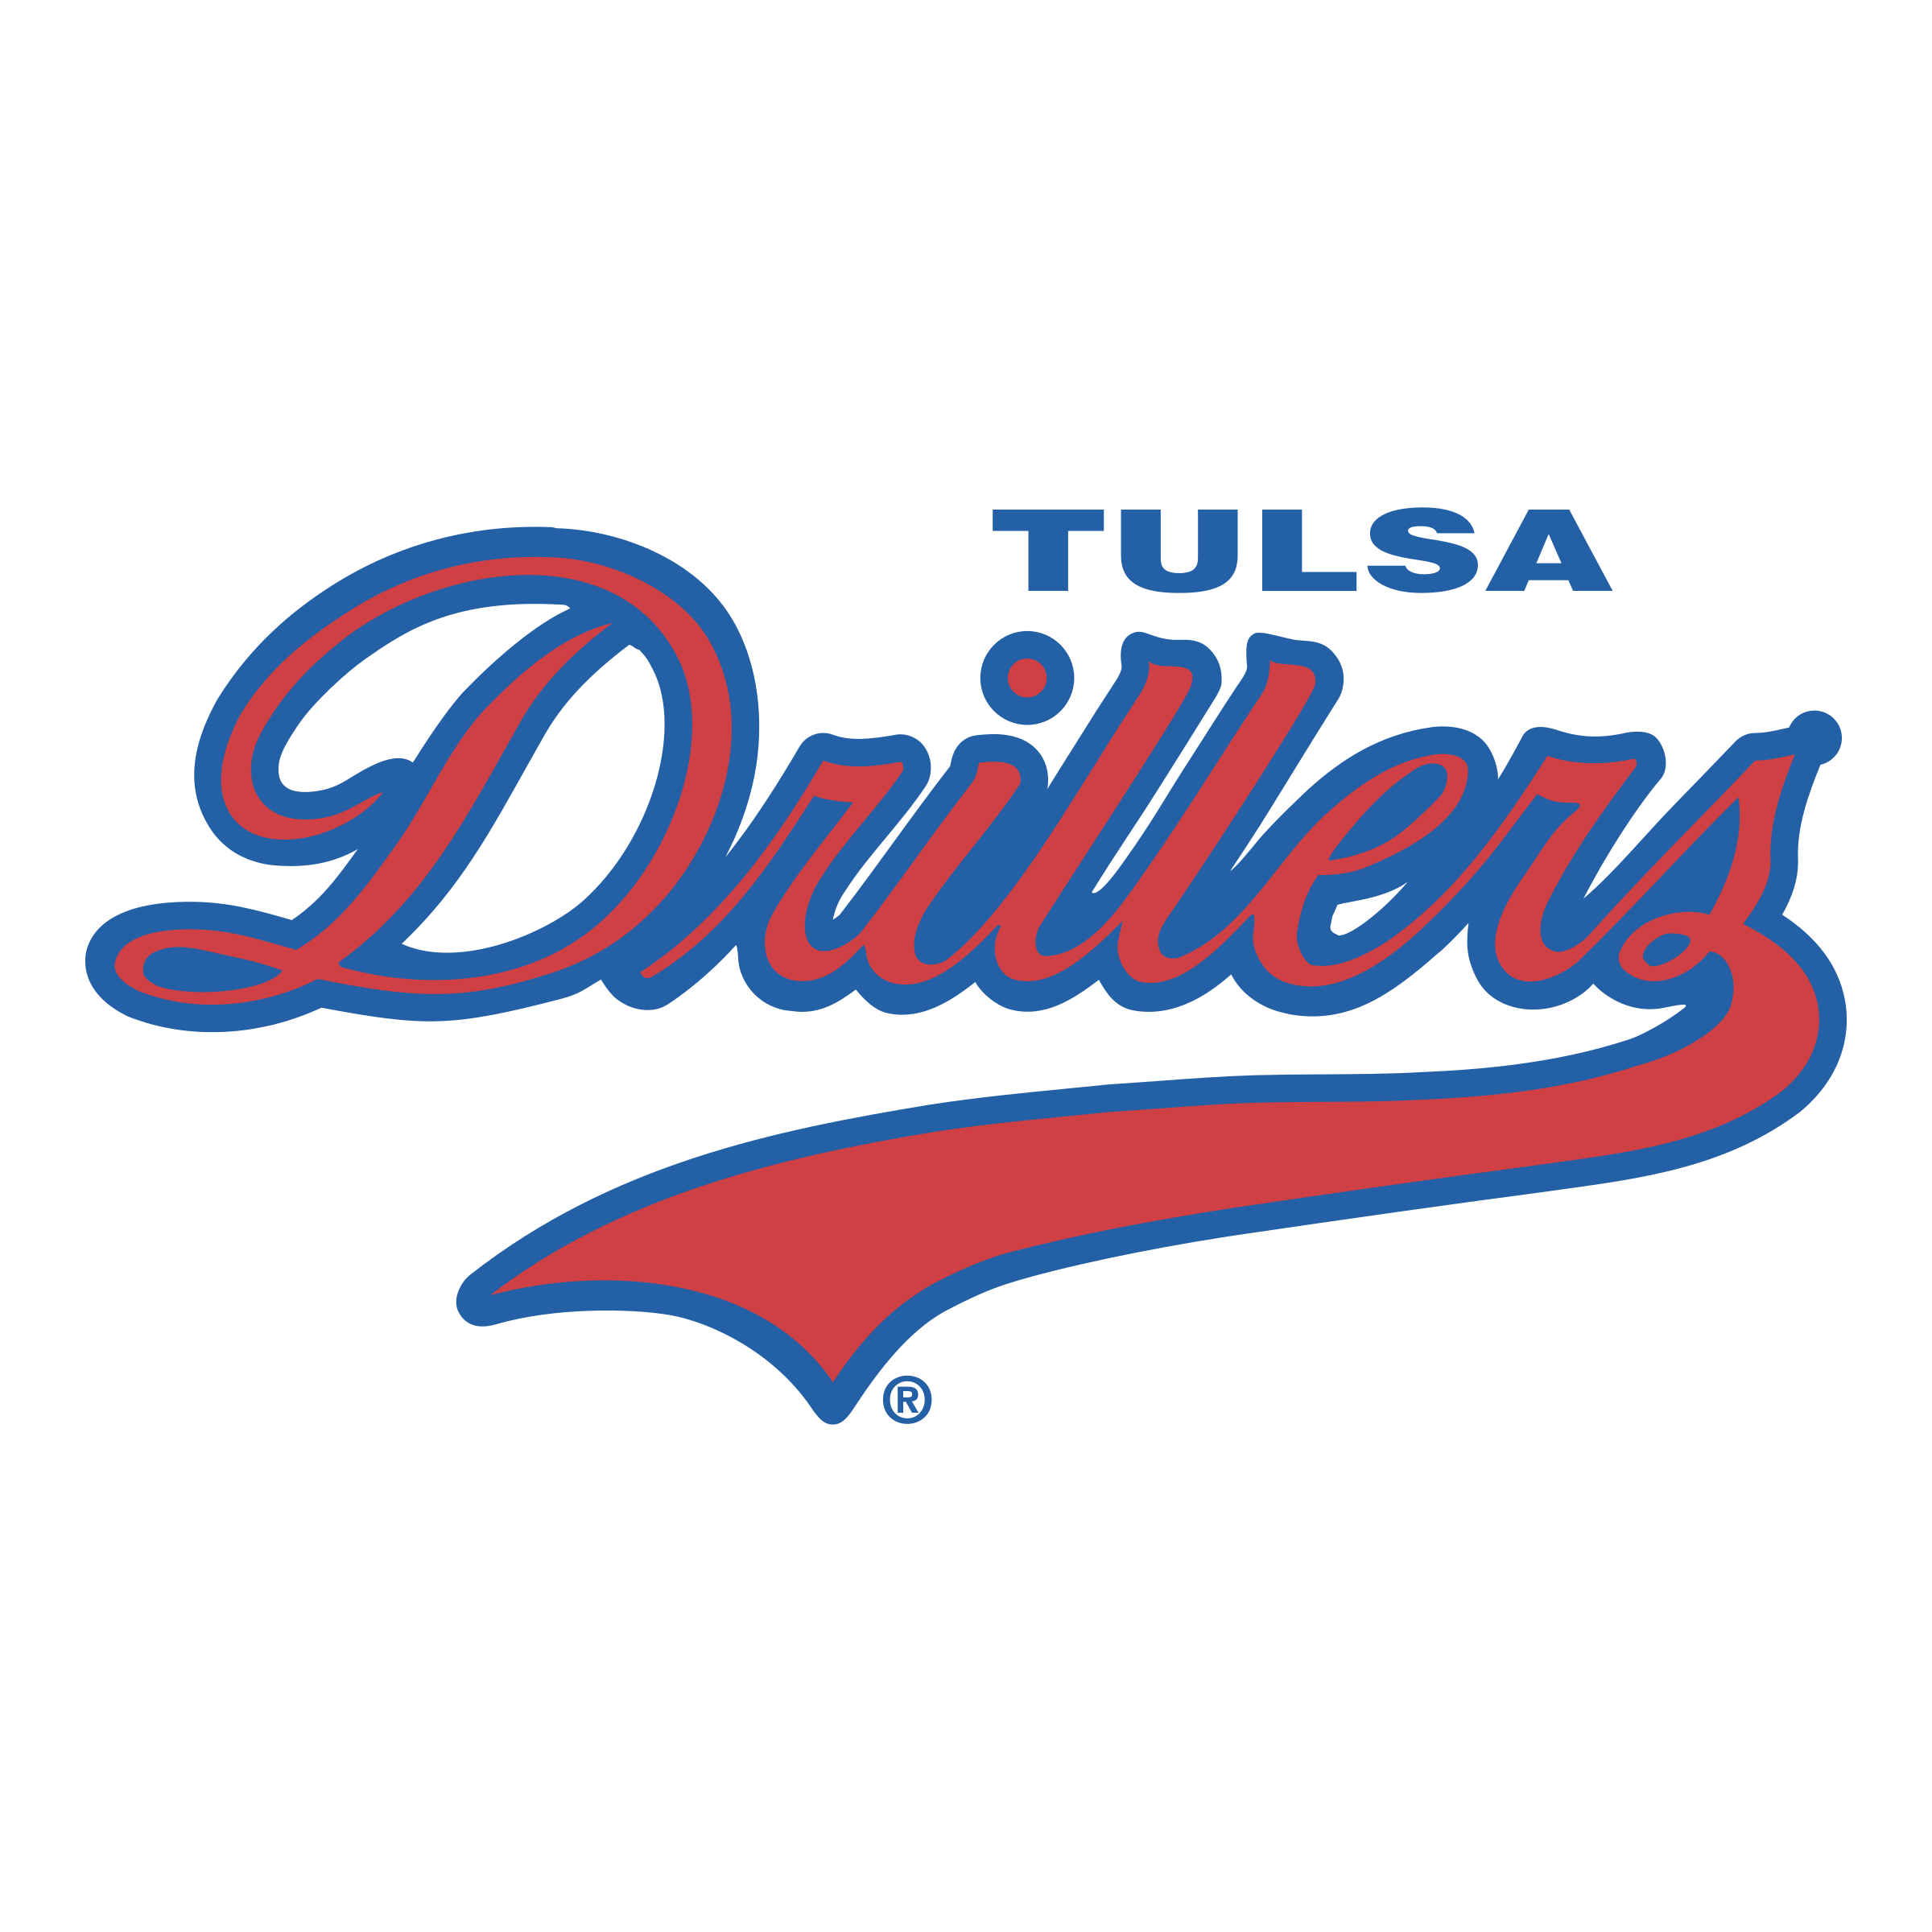 Drillers Logo - Tulsa Drillers Logo PNG Transparent & SVG Vector - Freebie Supply